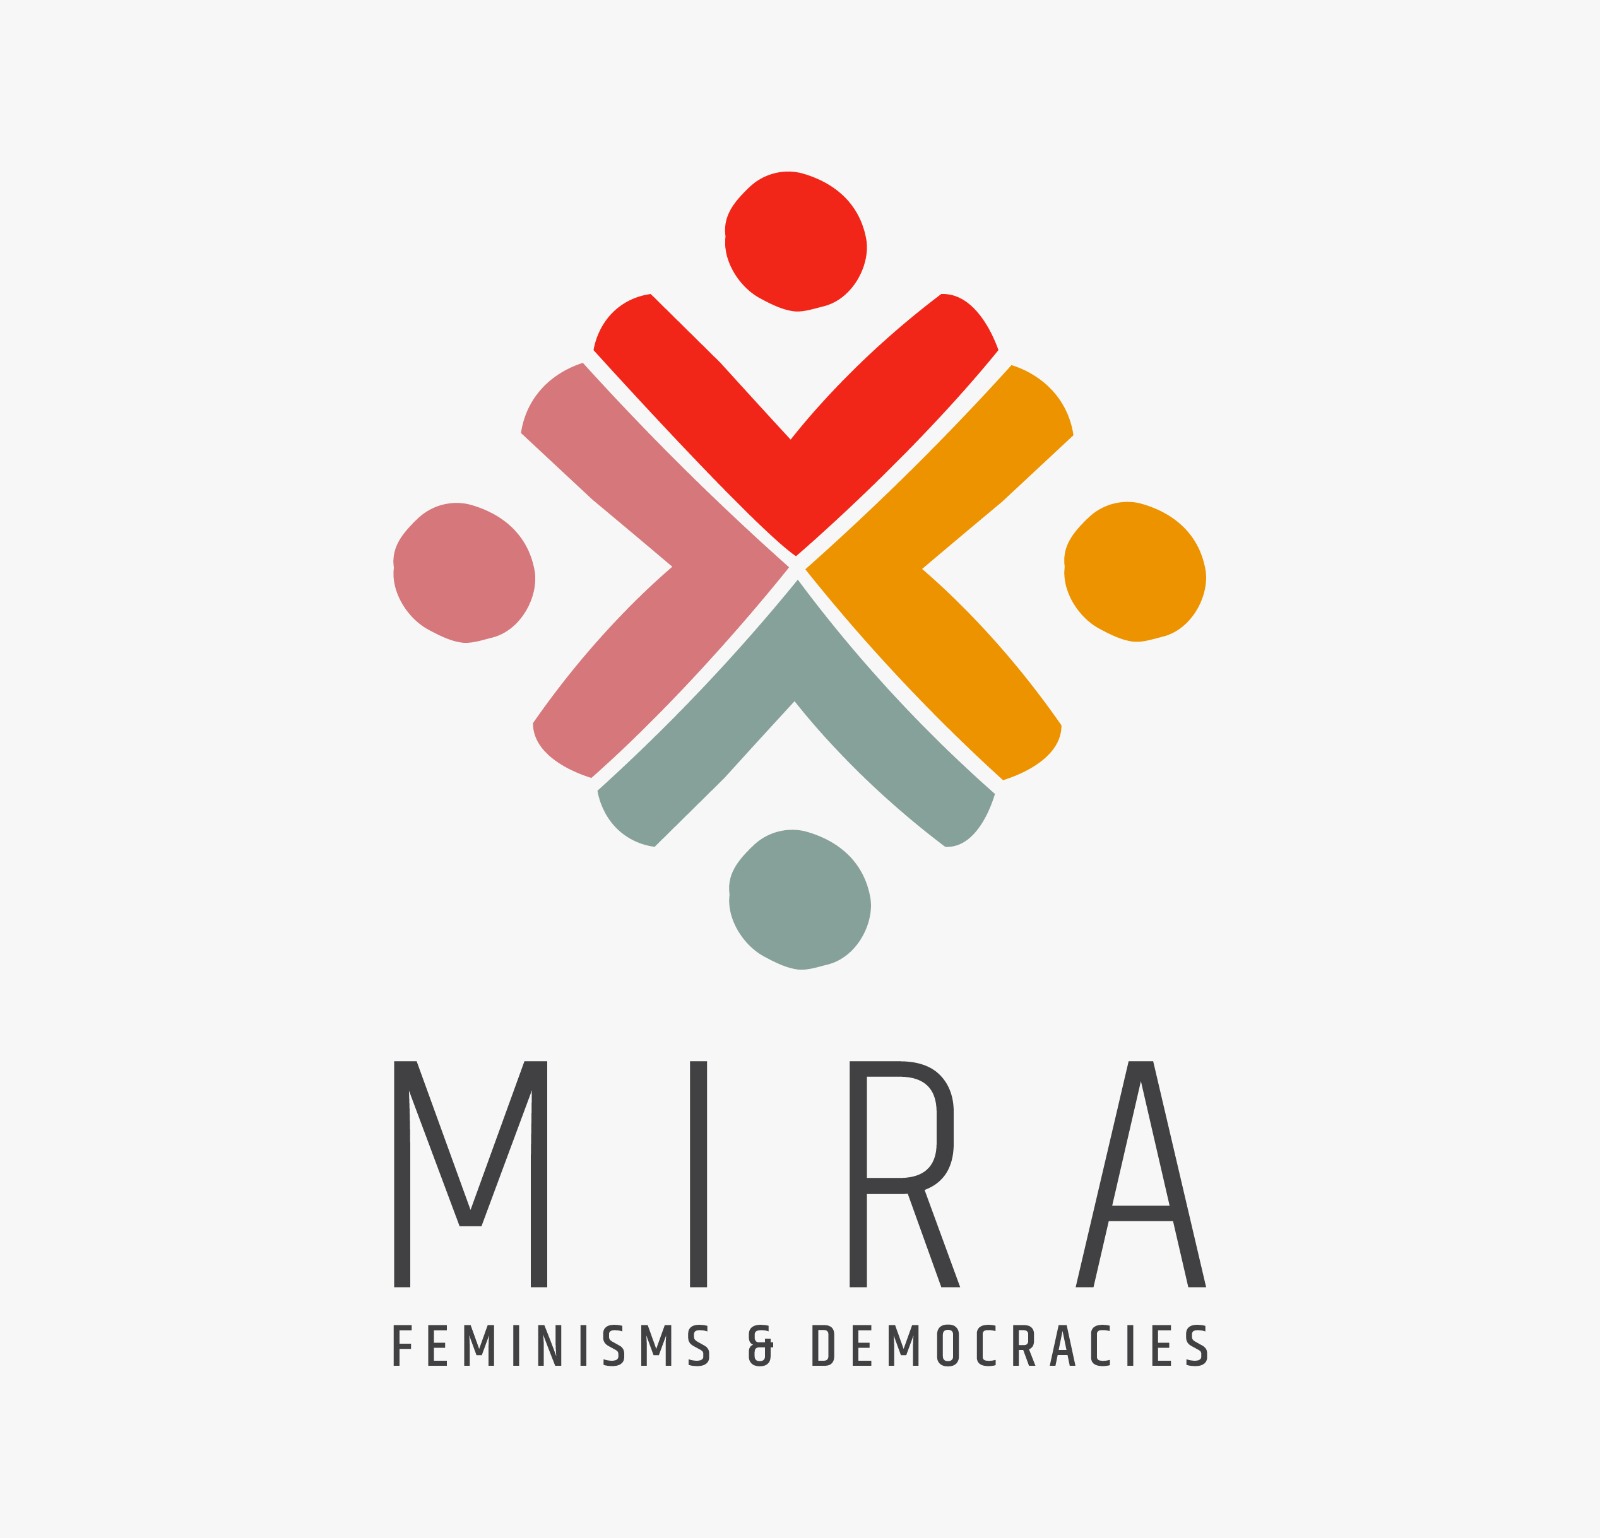 MIRA: FEMINISMS AND DEMOCRACIES